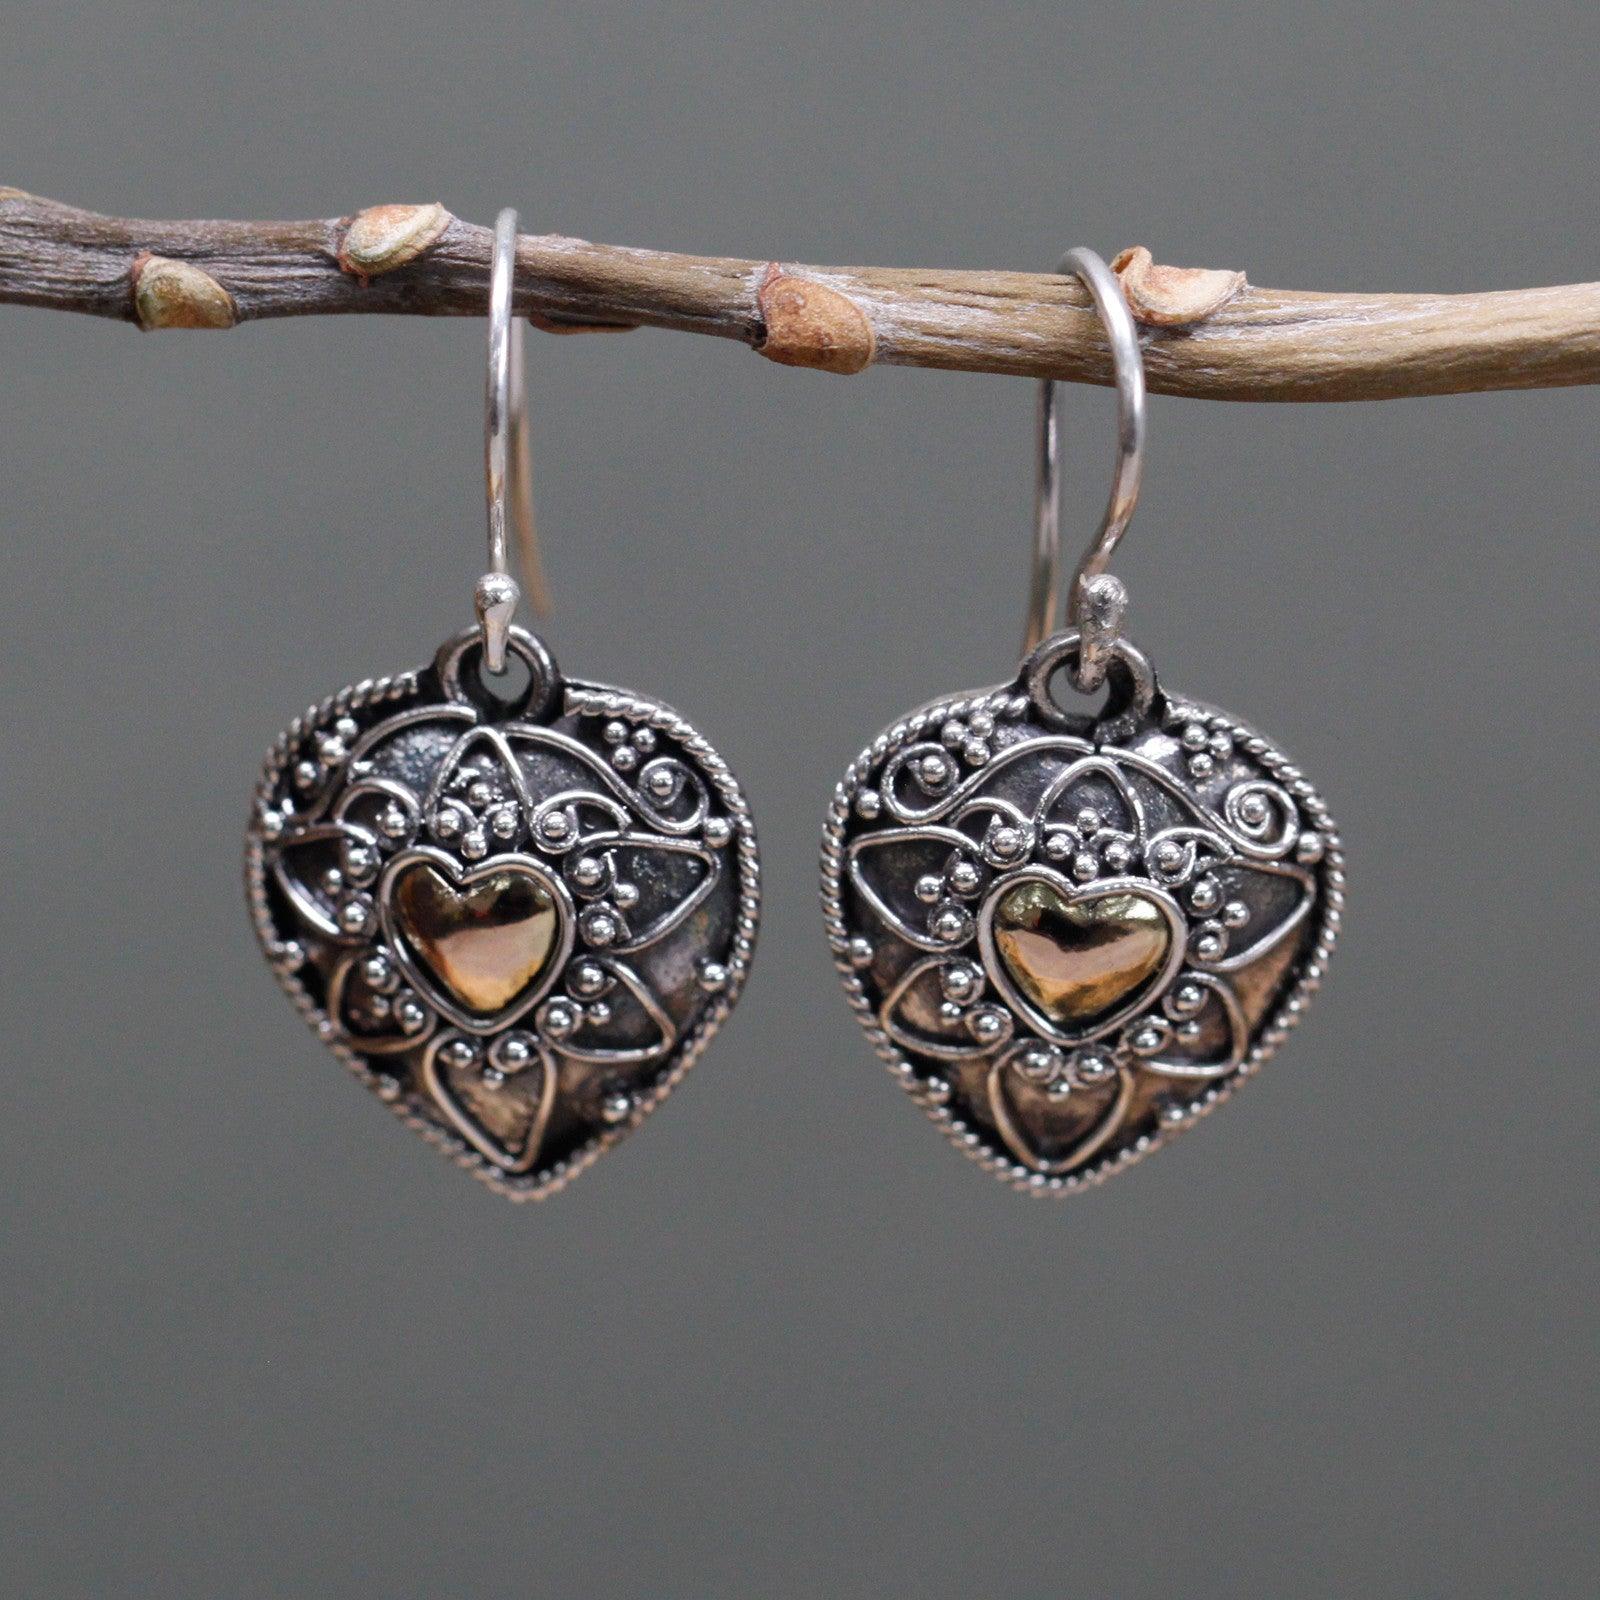 Handmade Bali Jewellery Silver & Gold Earring - Mandala Hearts - DuvetDay.co.uk